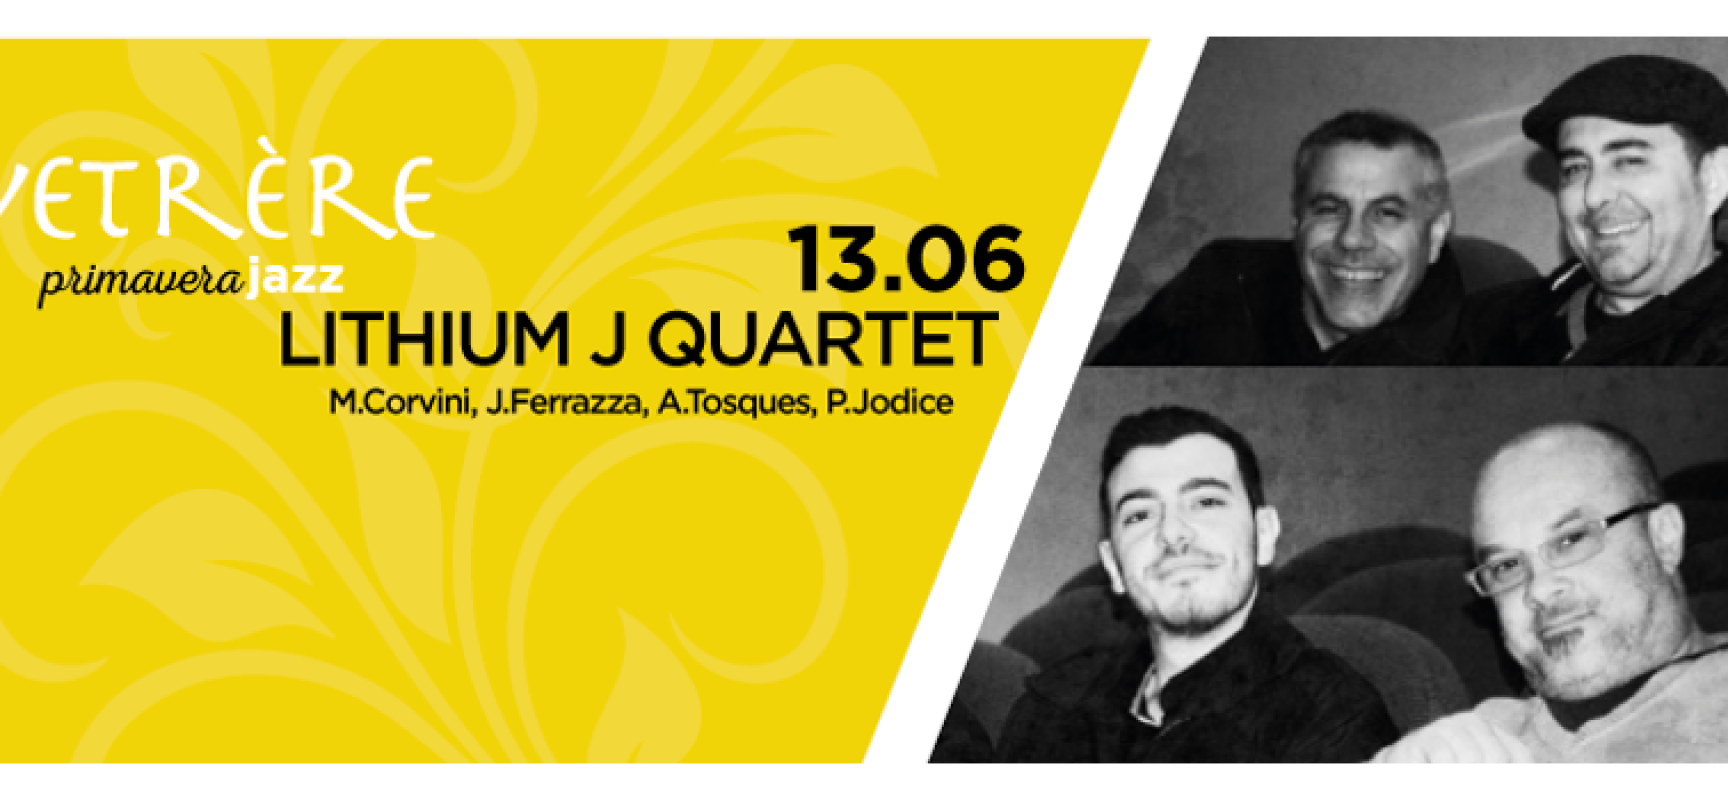 Vetrère Primavera Jazz, Lithium J Quartet a Palazzo Ammazzalorsa / PROGRAMMA